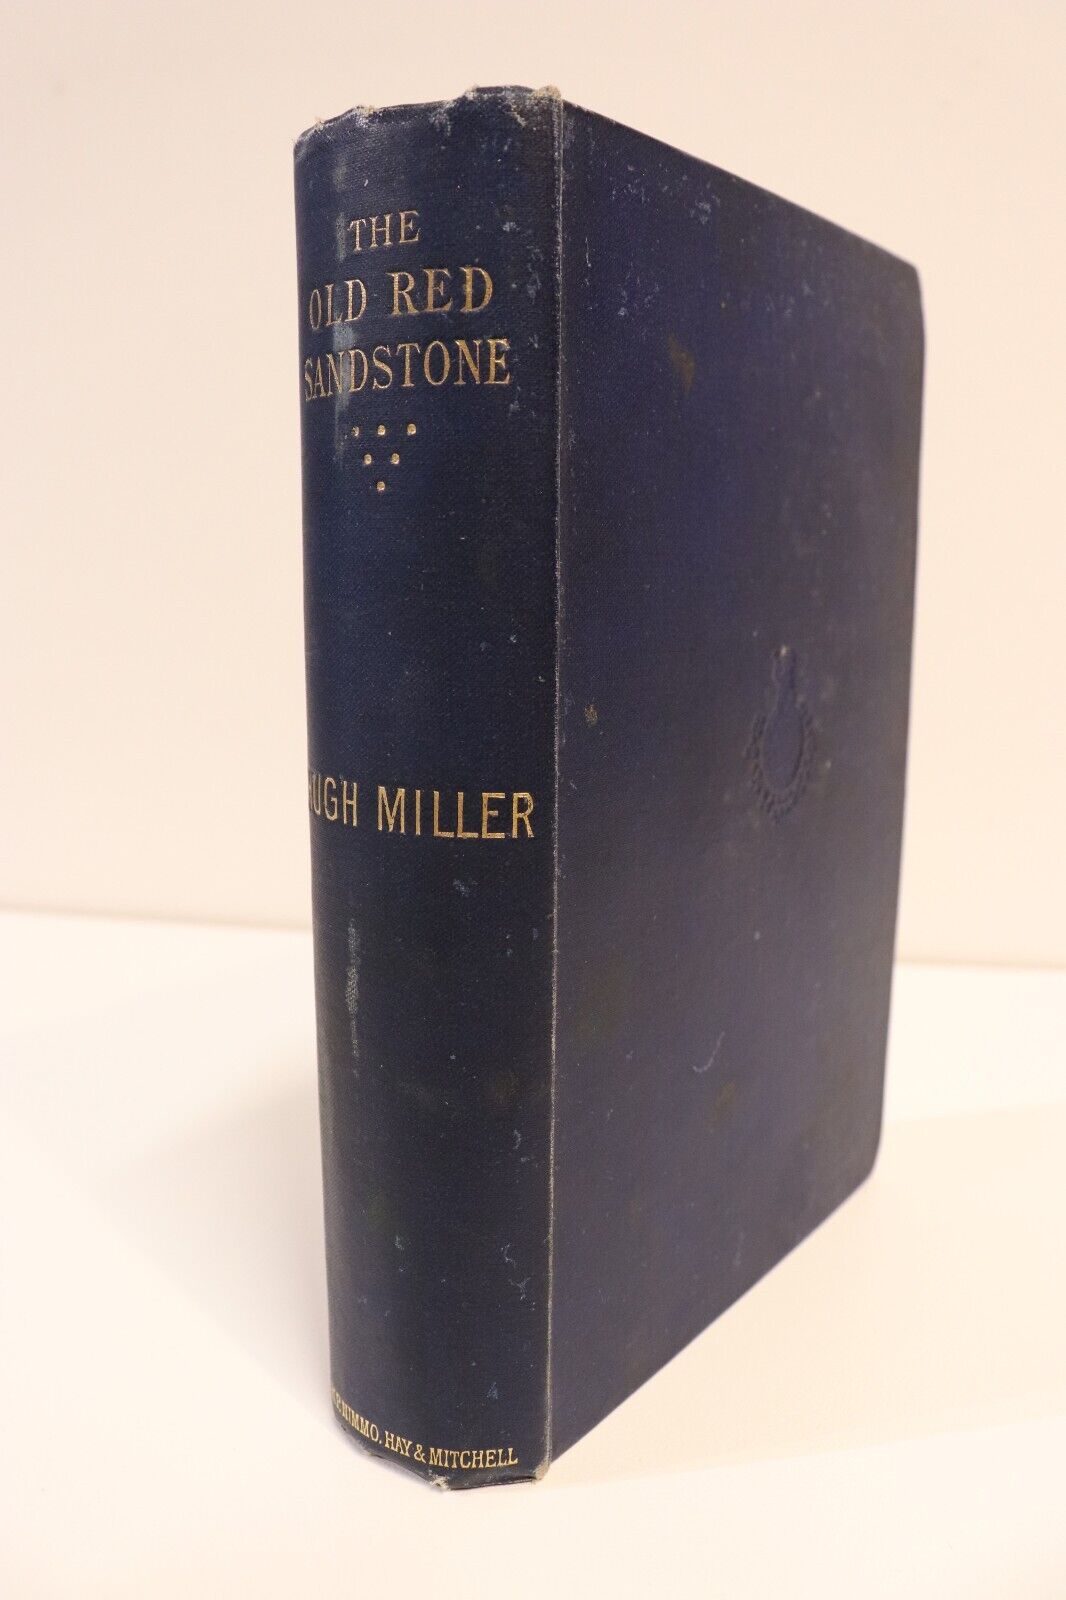 The Old Red Sandstone by Hugh Miller - 1892 - Antique Natural History Book